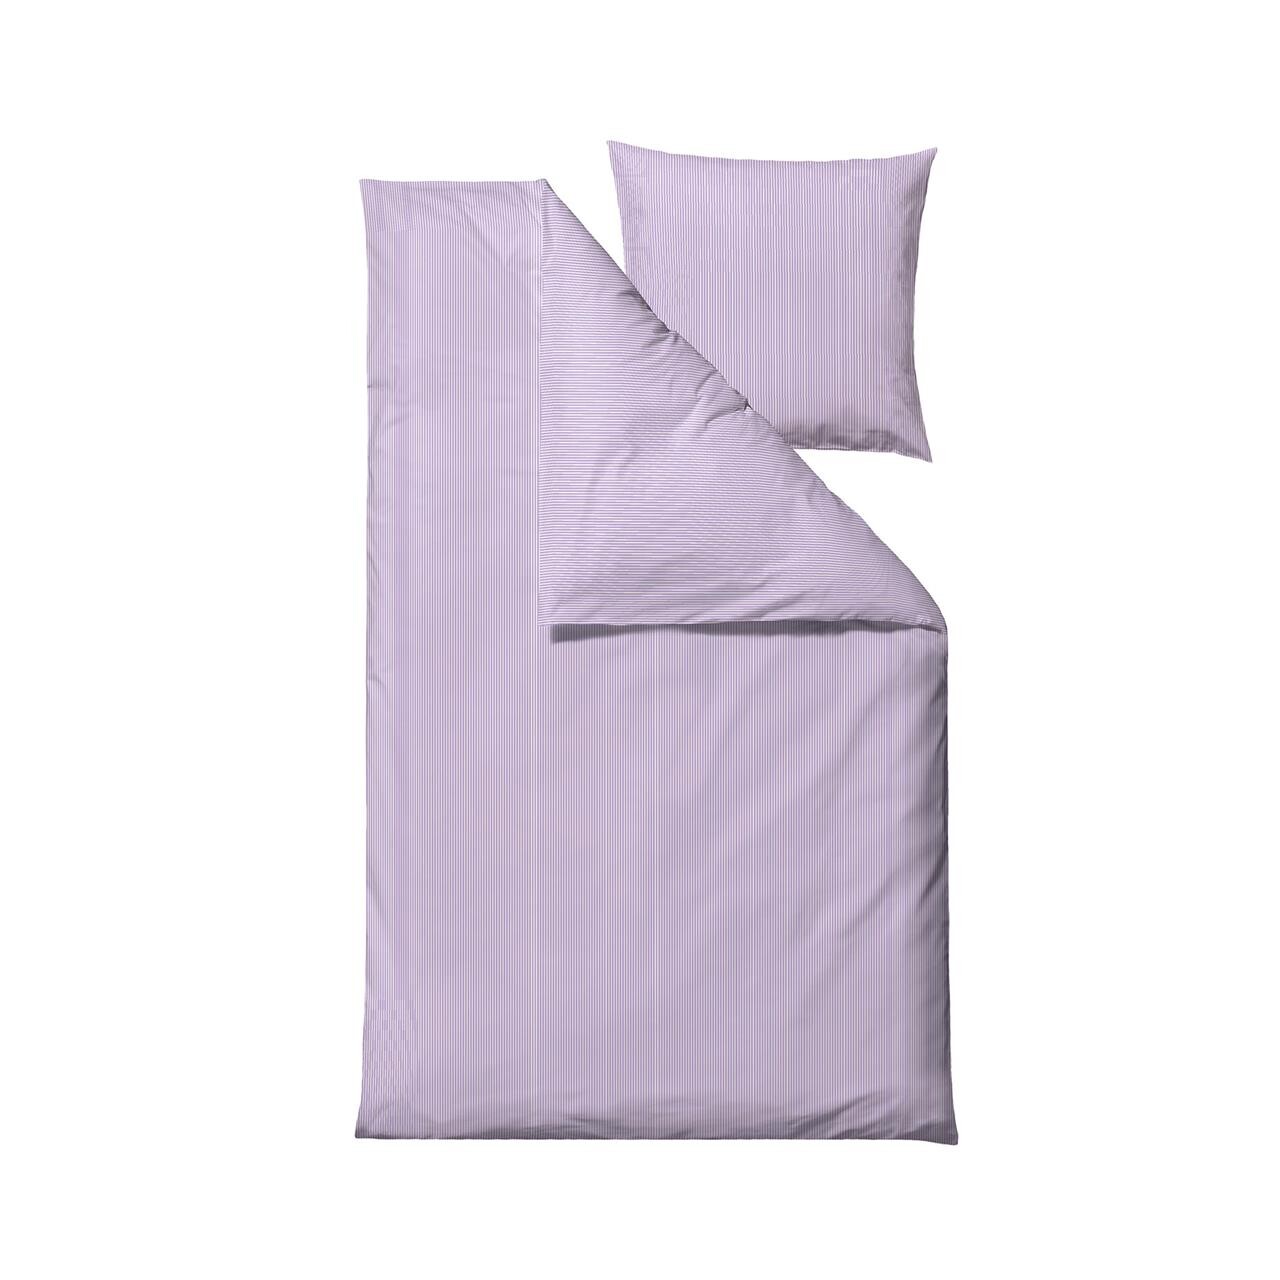 SÖDAHL Cheerful sengetøj 140×200 cm lavender